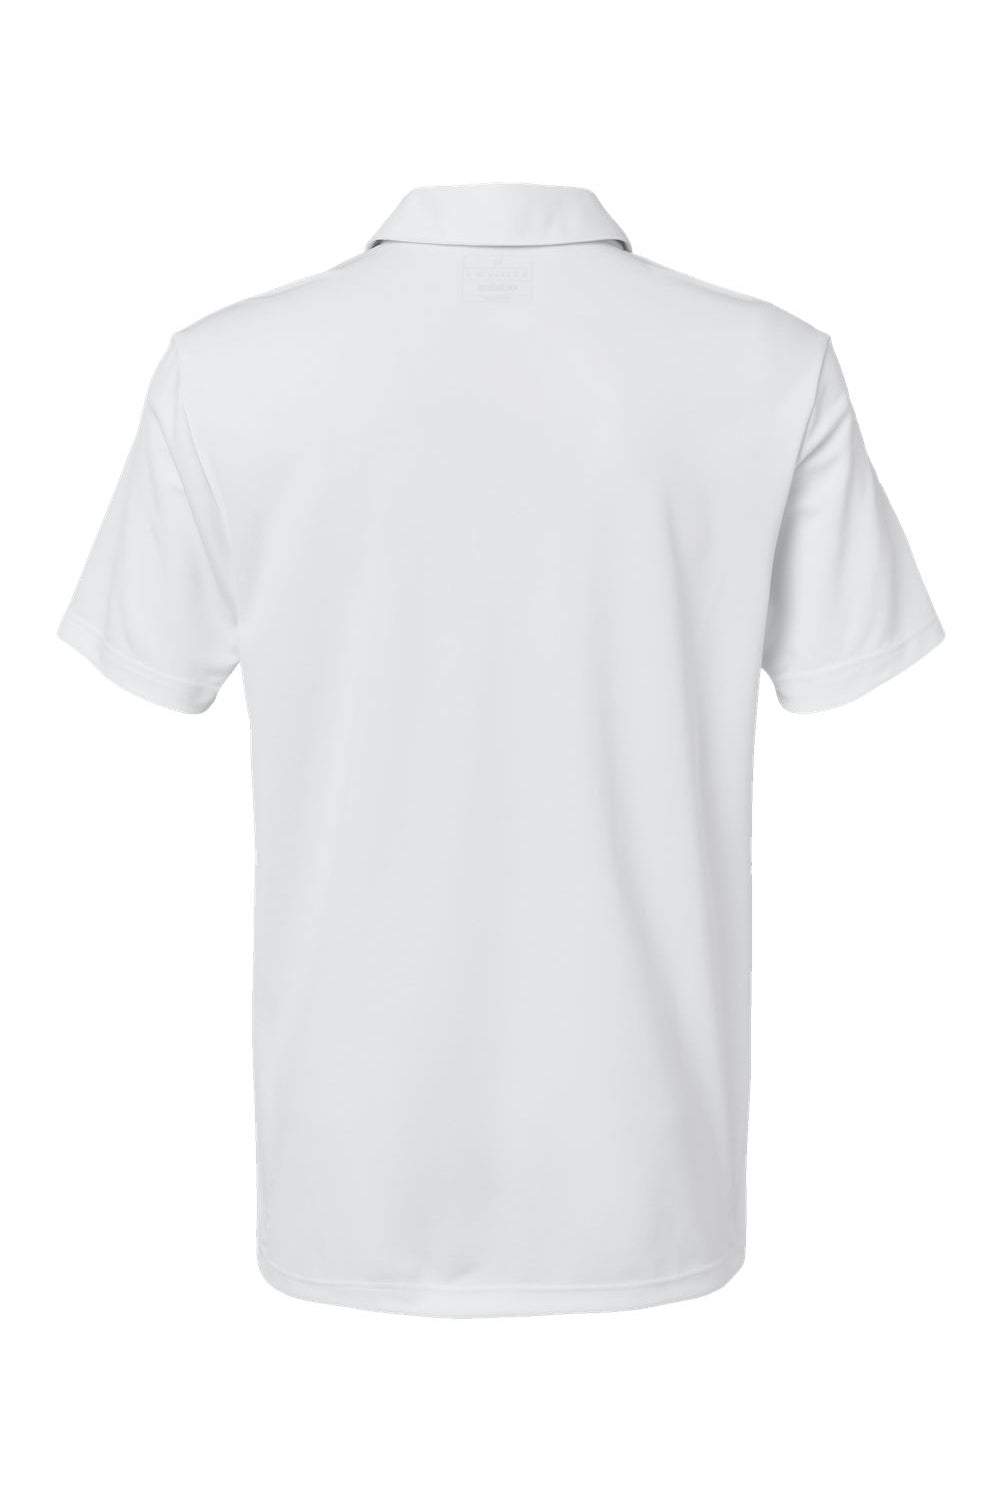 Adidas A585 Mens Camo Chest Print Short Sleeve Polo Shirt White Flat Back